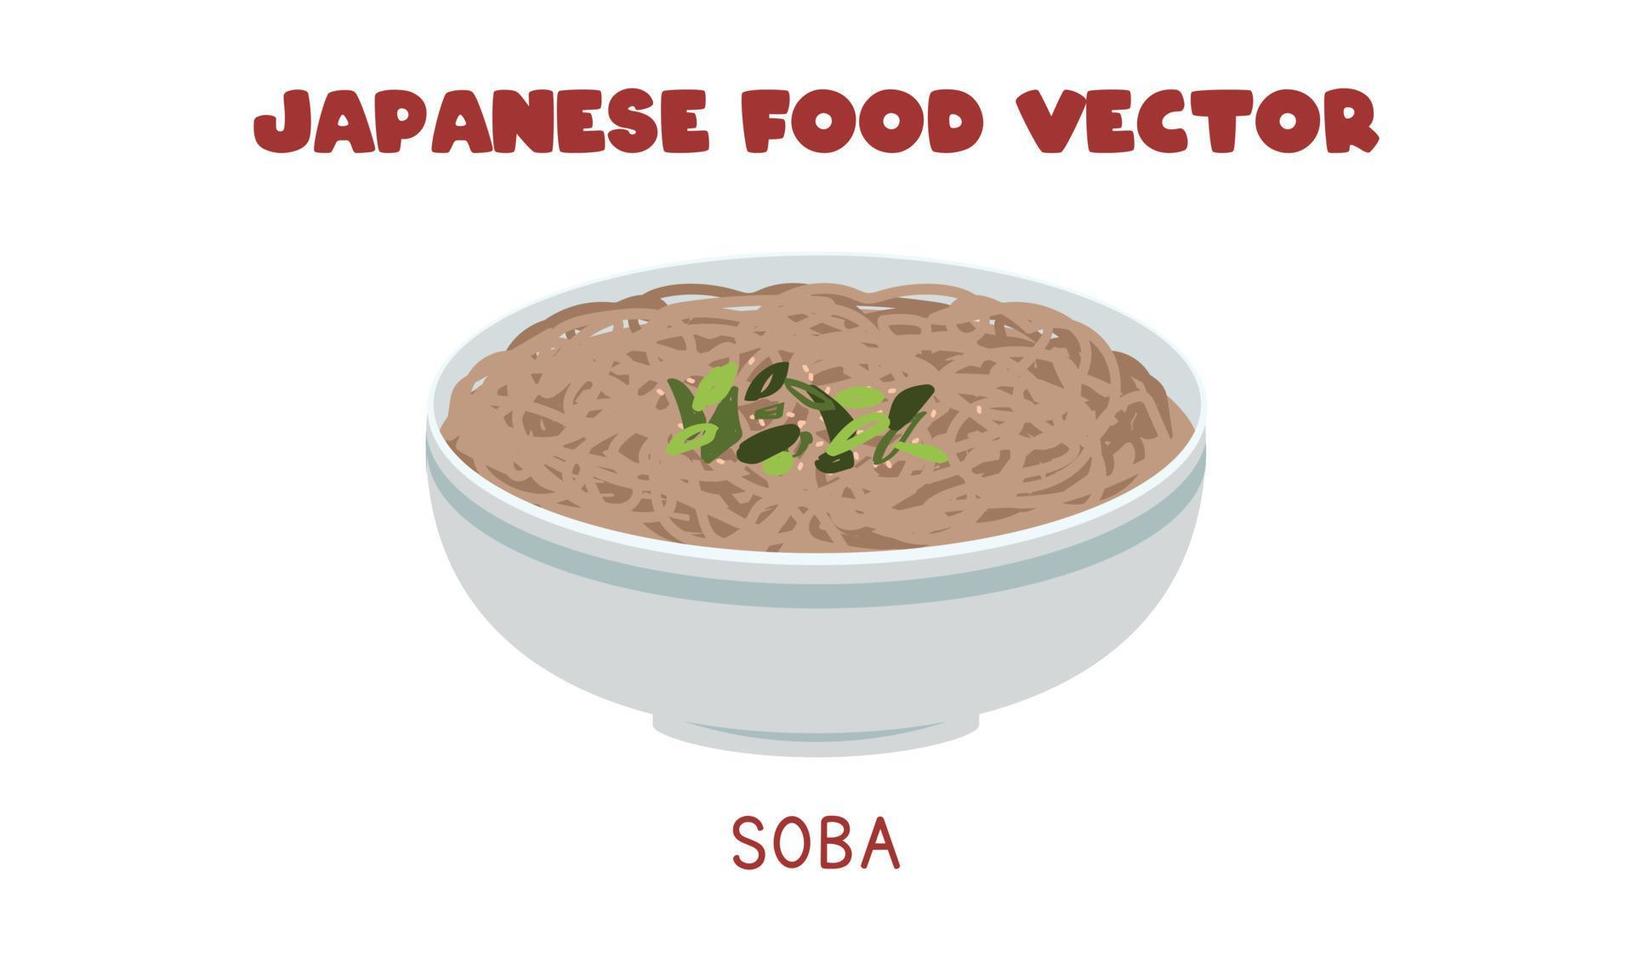 Japans soba noodle soep kom vlak vector ontwerp illustratie, clip art tekenfilm stijl. Aziatisch voedsel. Japans keuken. Japans voedsel